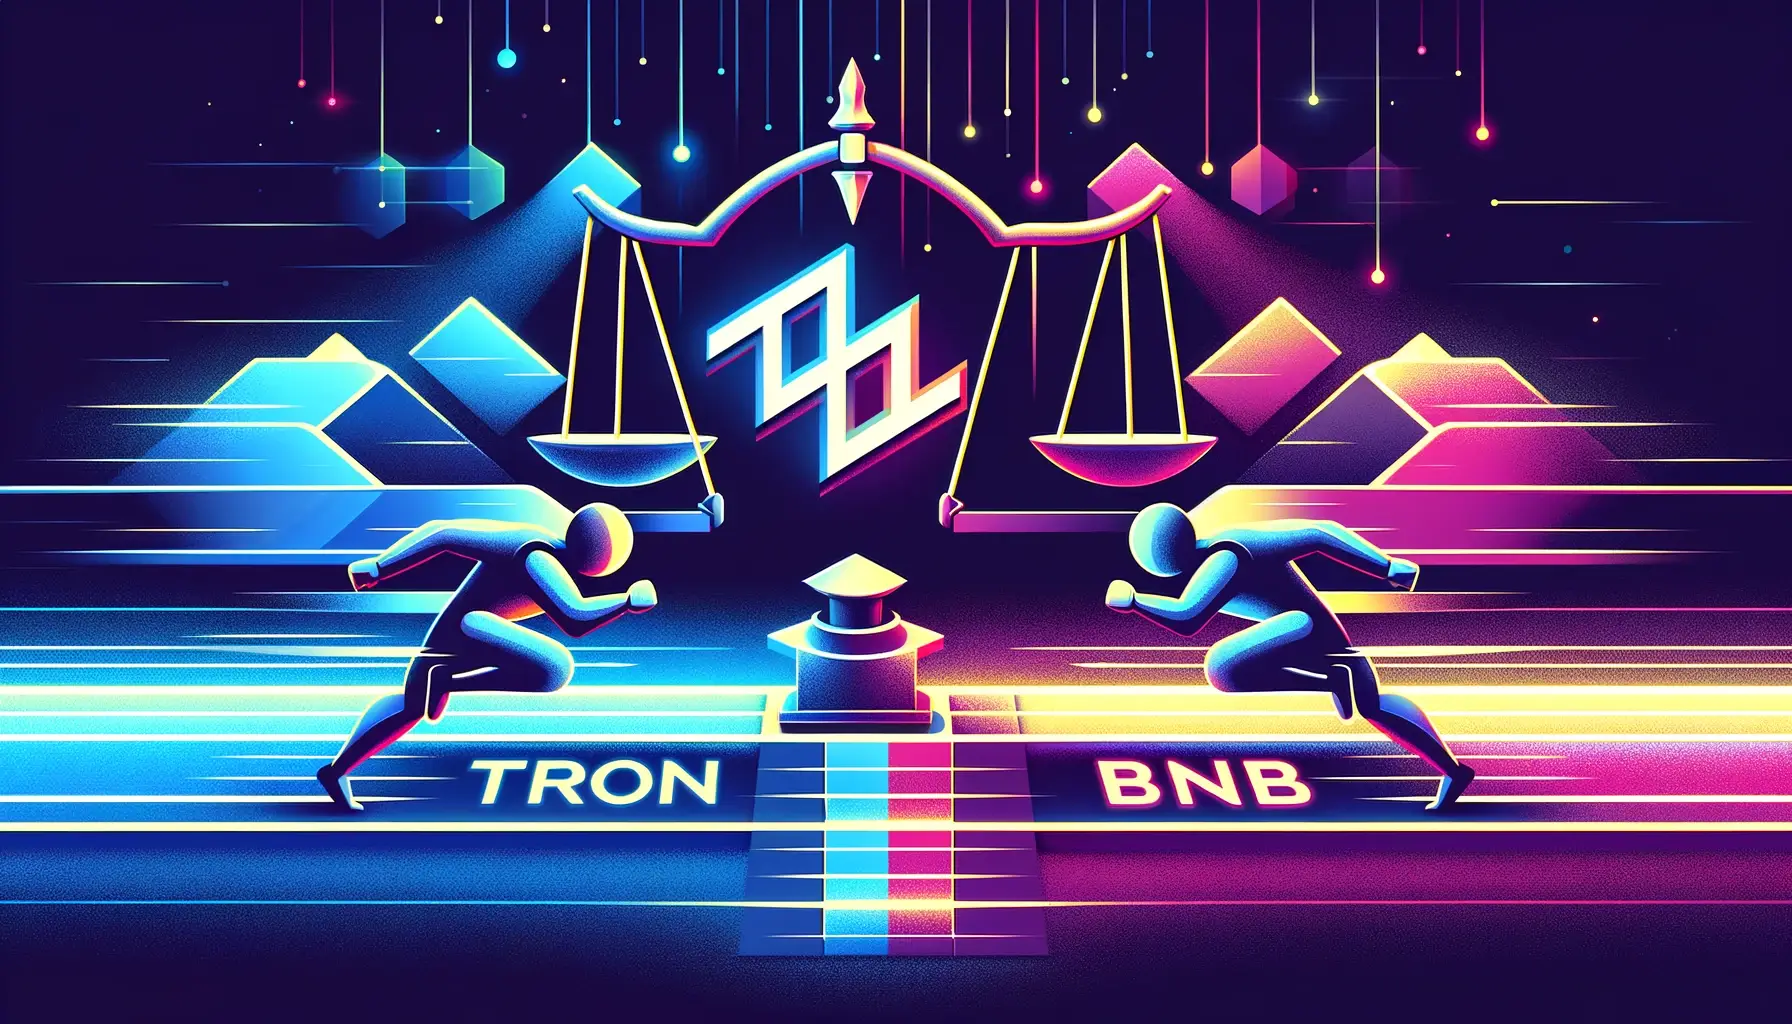 Tron network leaves Binance behind: Will TRX gain as well?